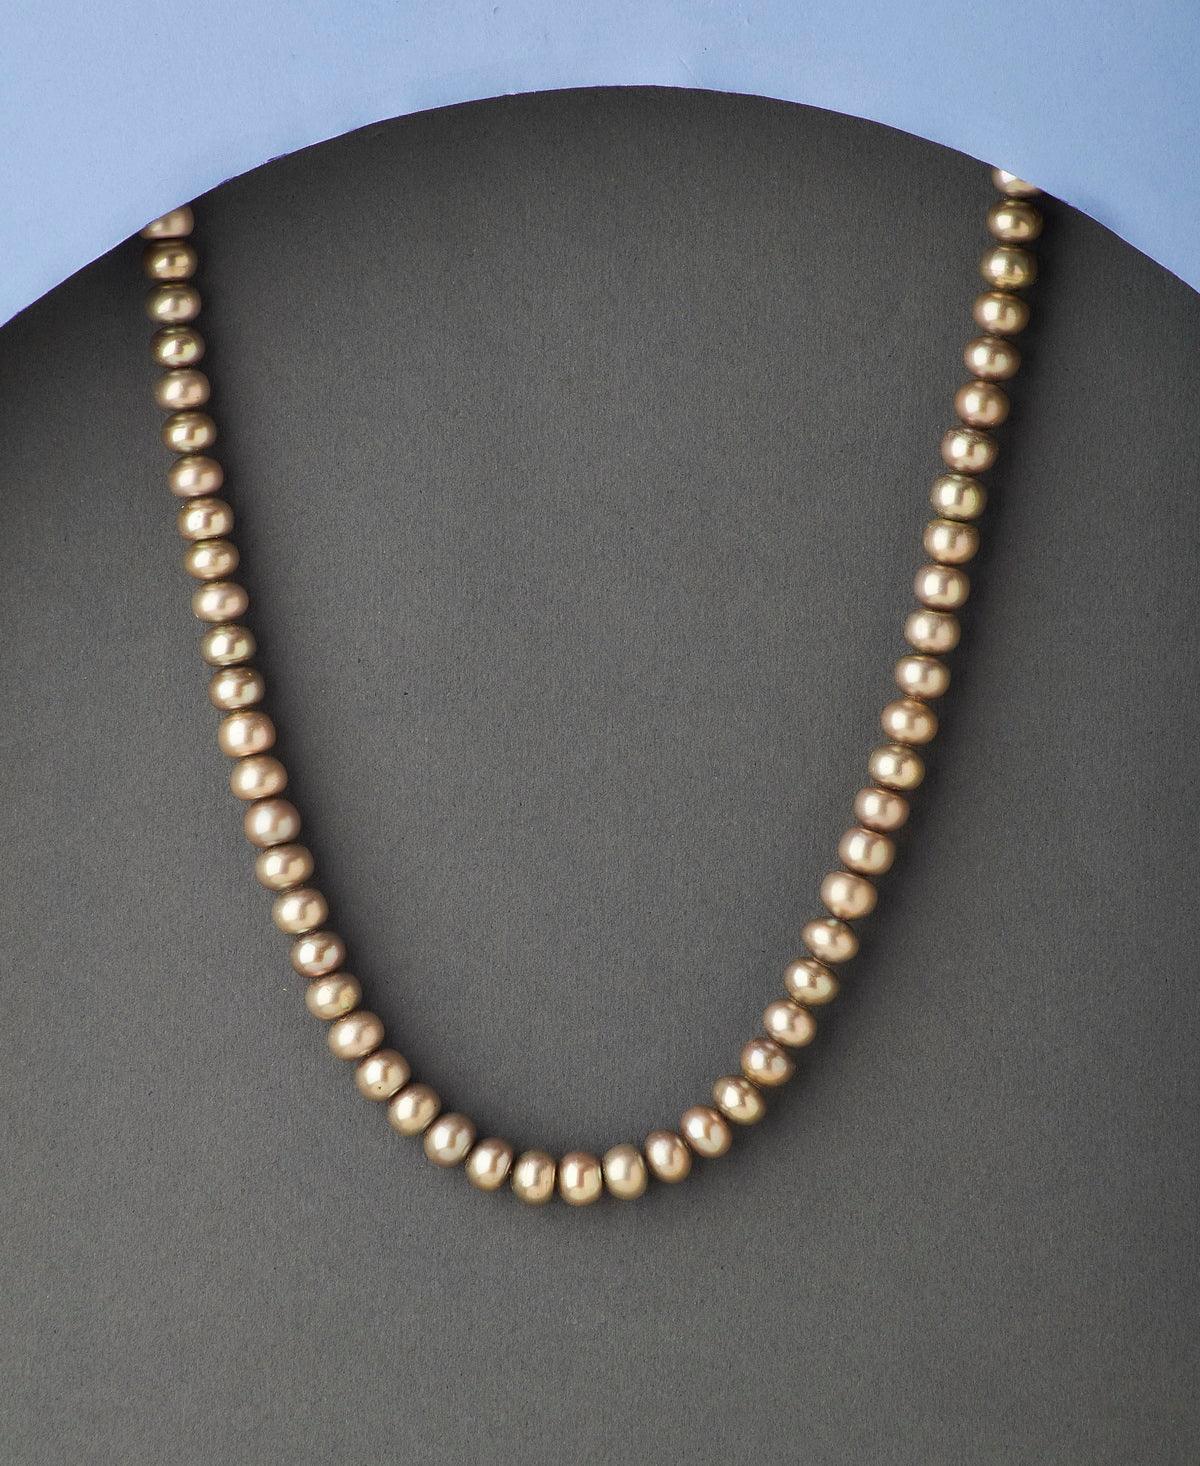 Elegant Grey Pearl Necklace - Chandrani Pearls